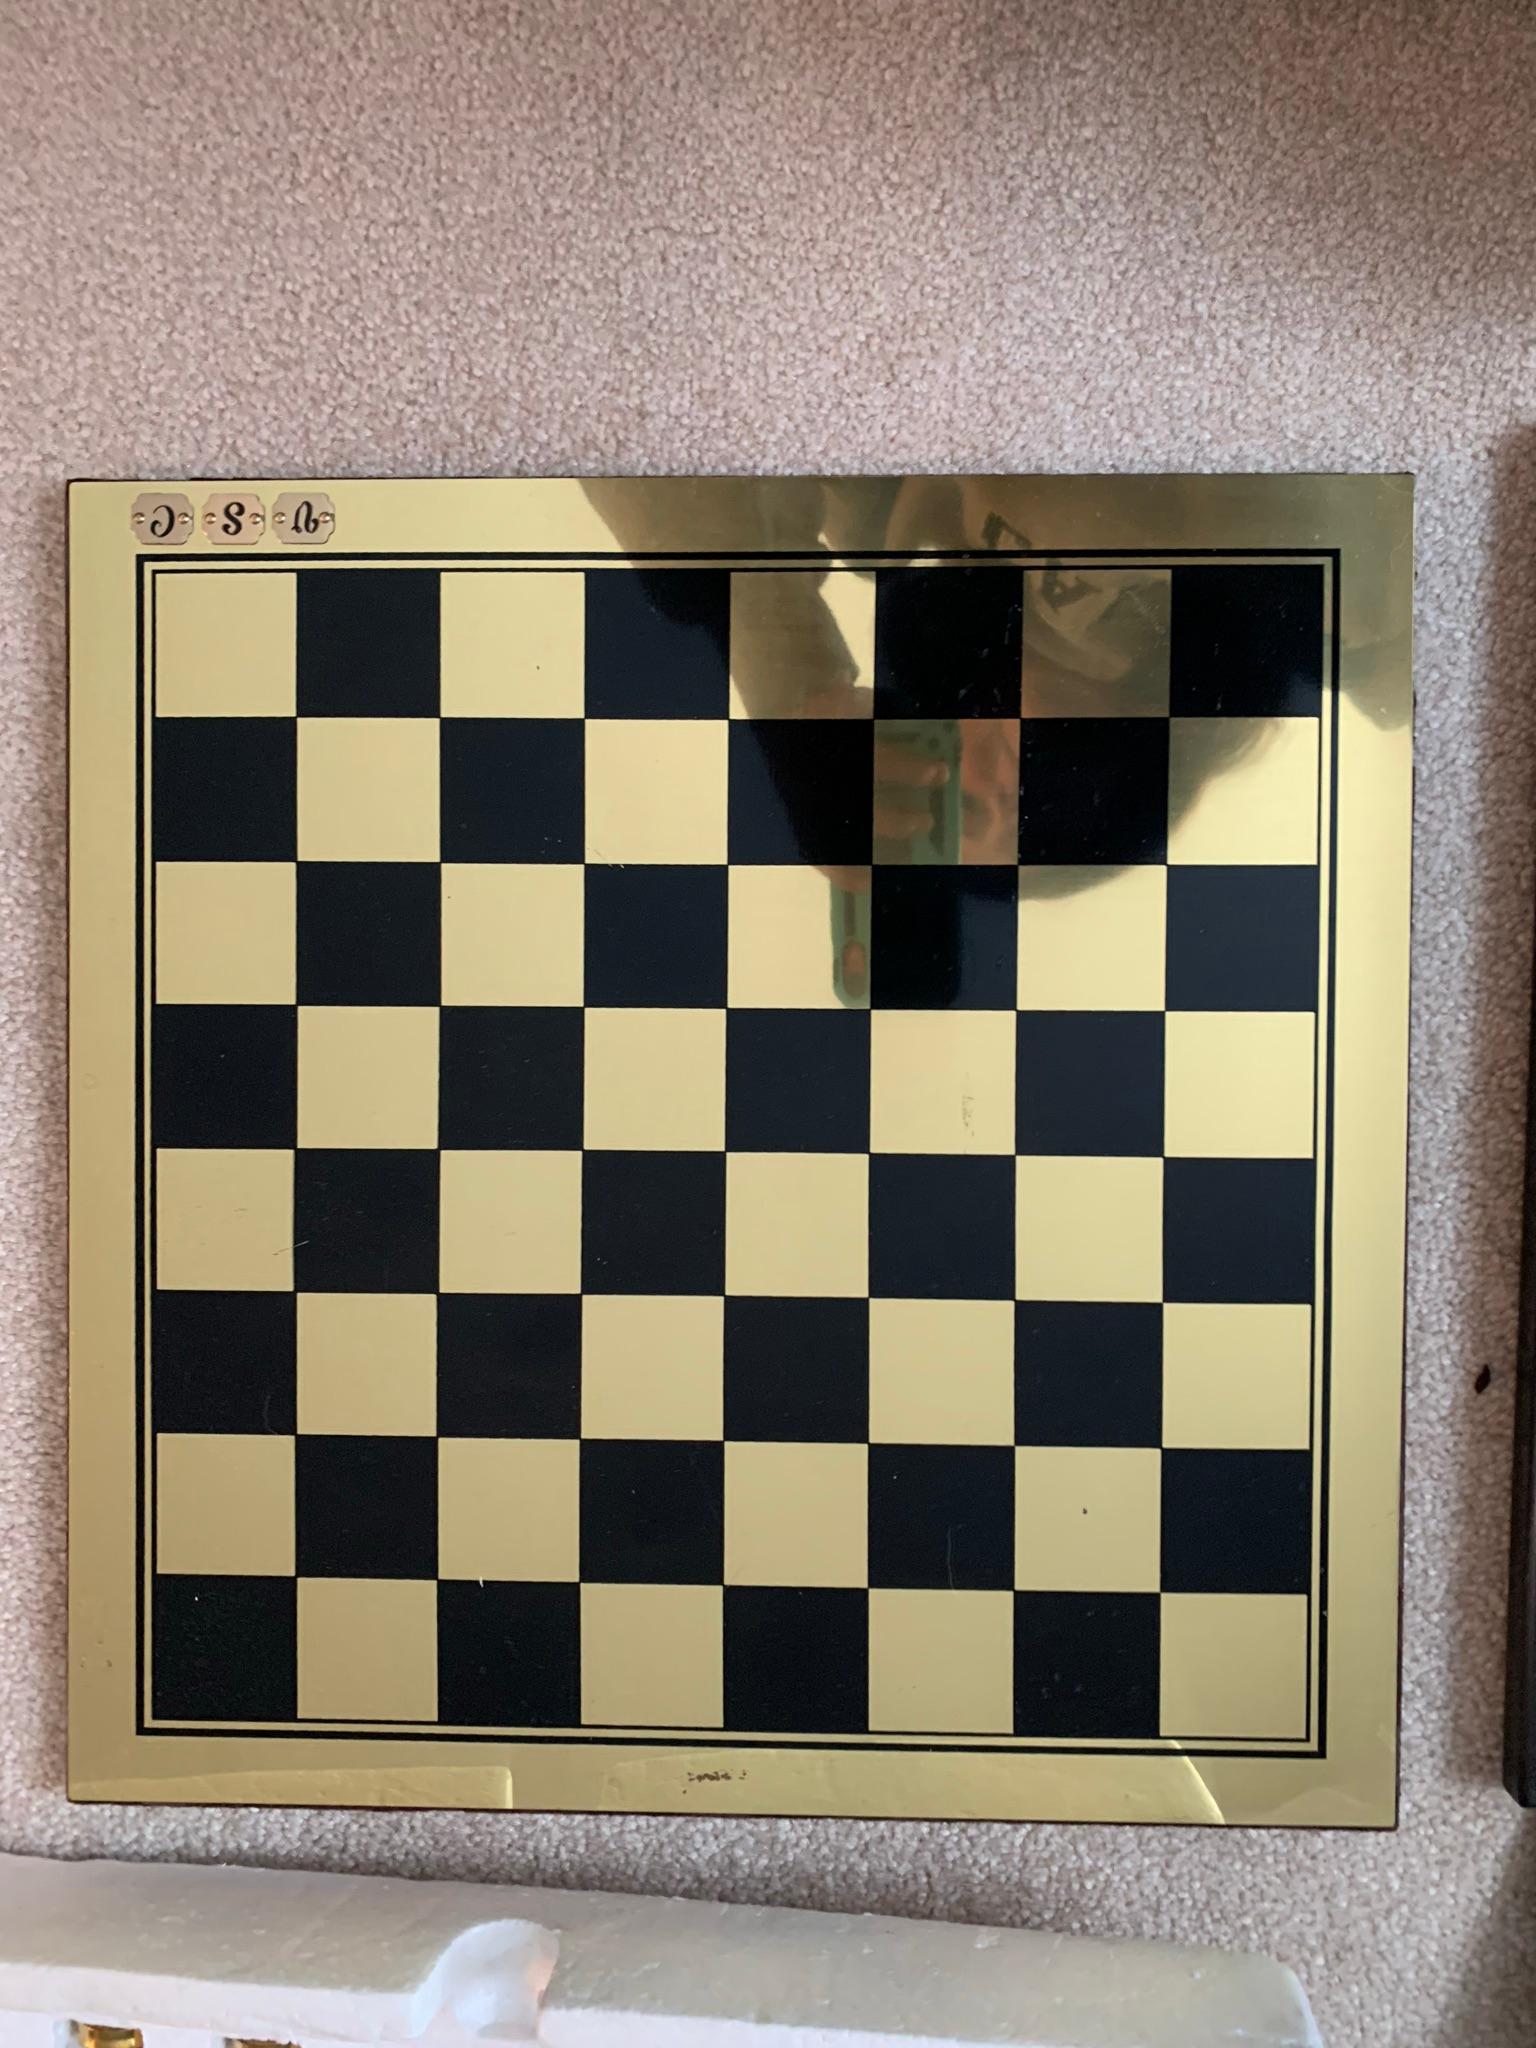 2 Chess Sets